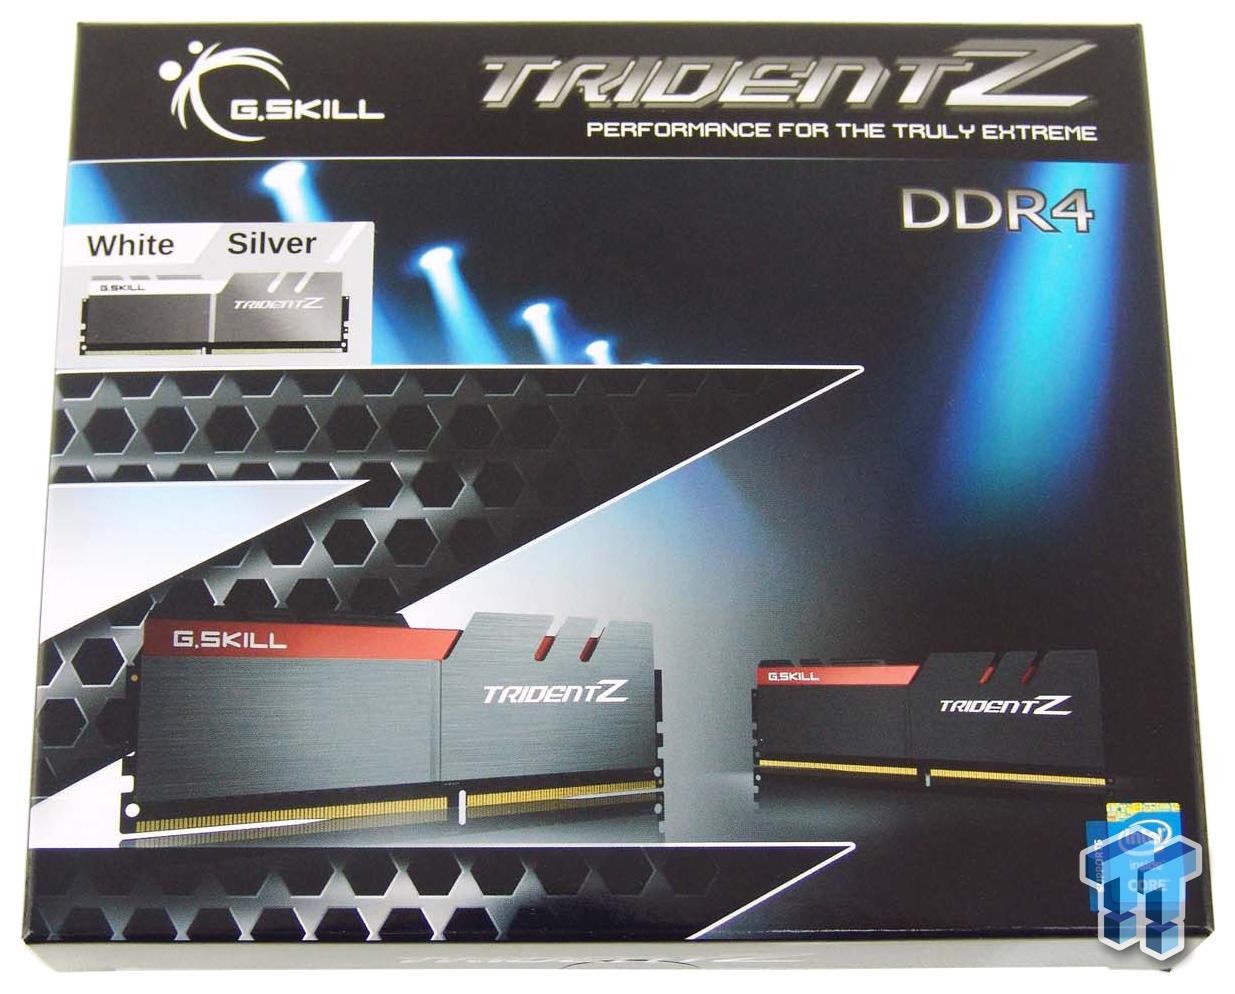 G.Skill TridentZ DDR4-3200 32GB RAM Kit Review